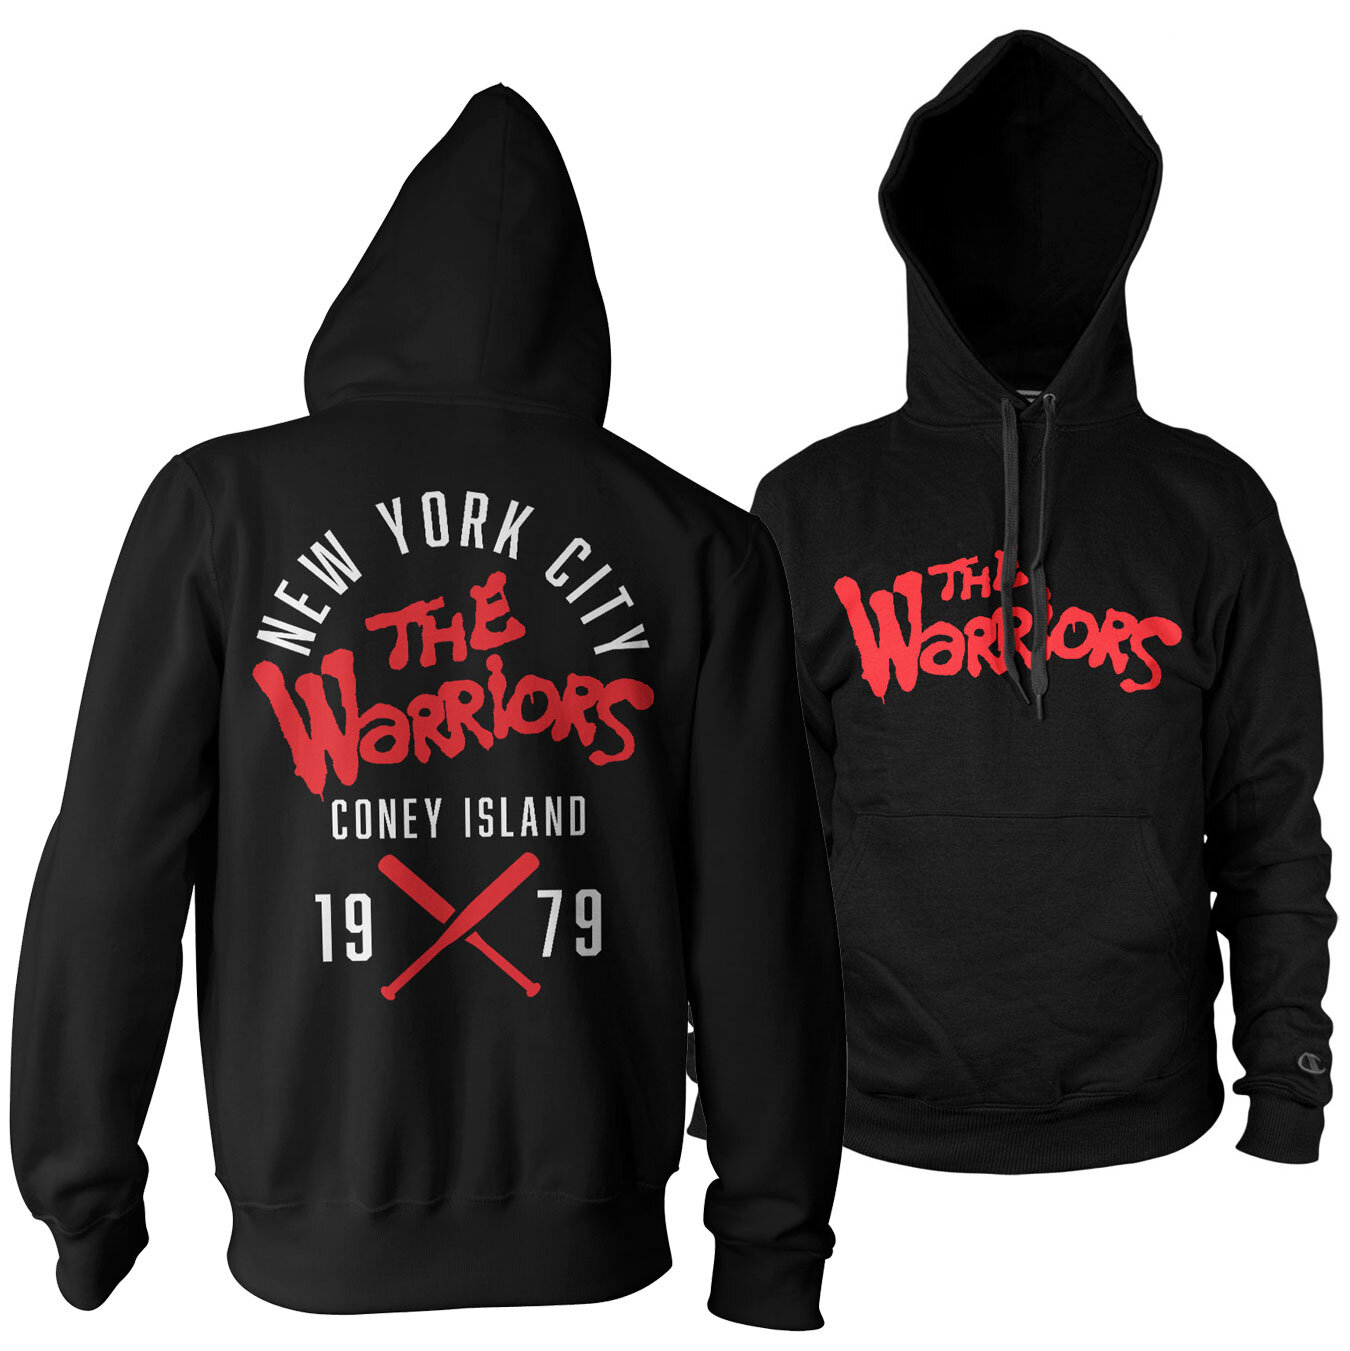 The Warriors - Coney Island Hoodie